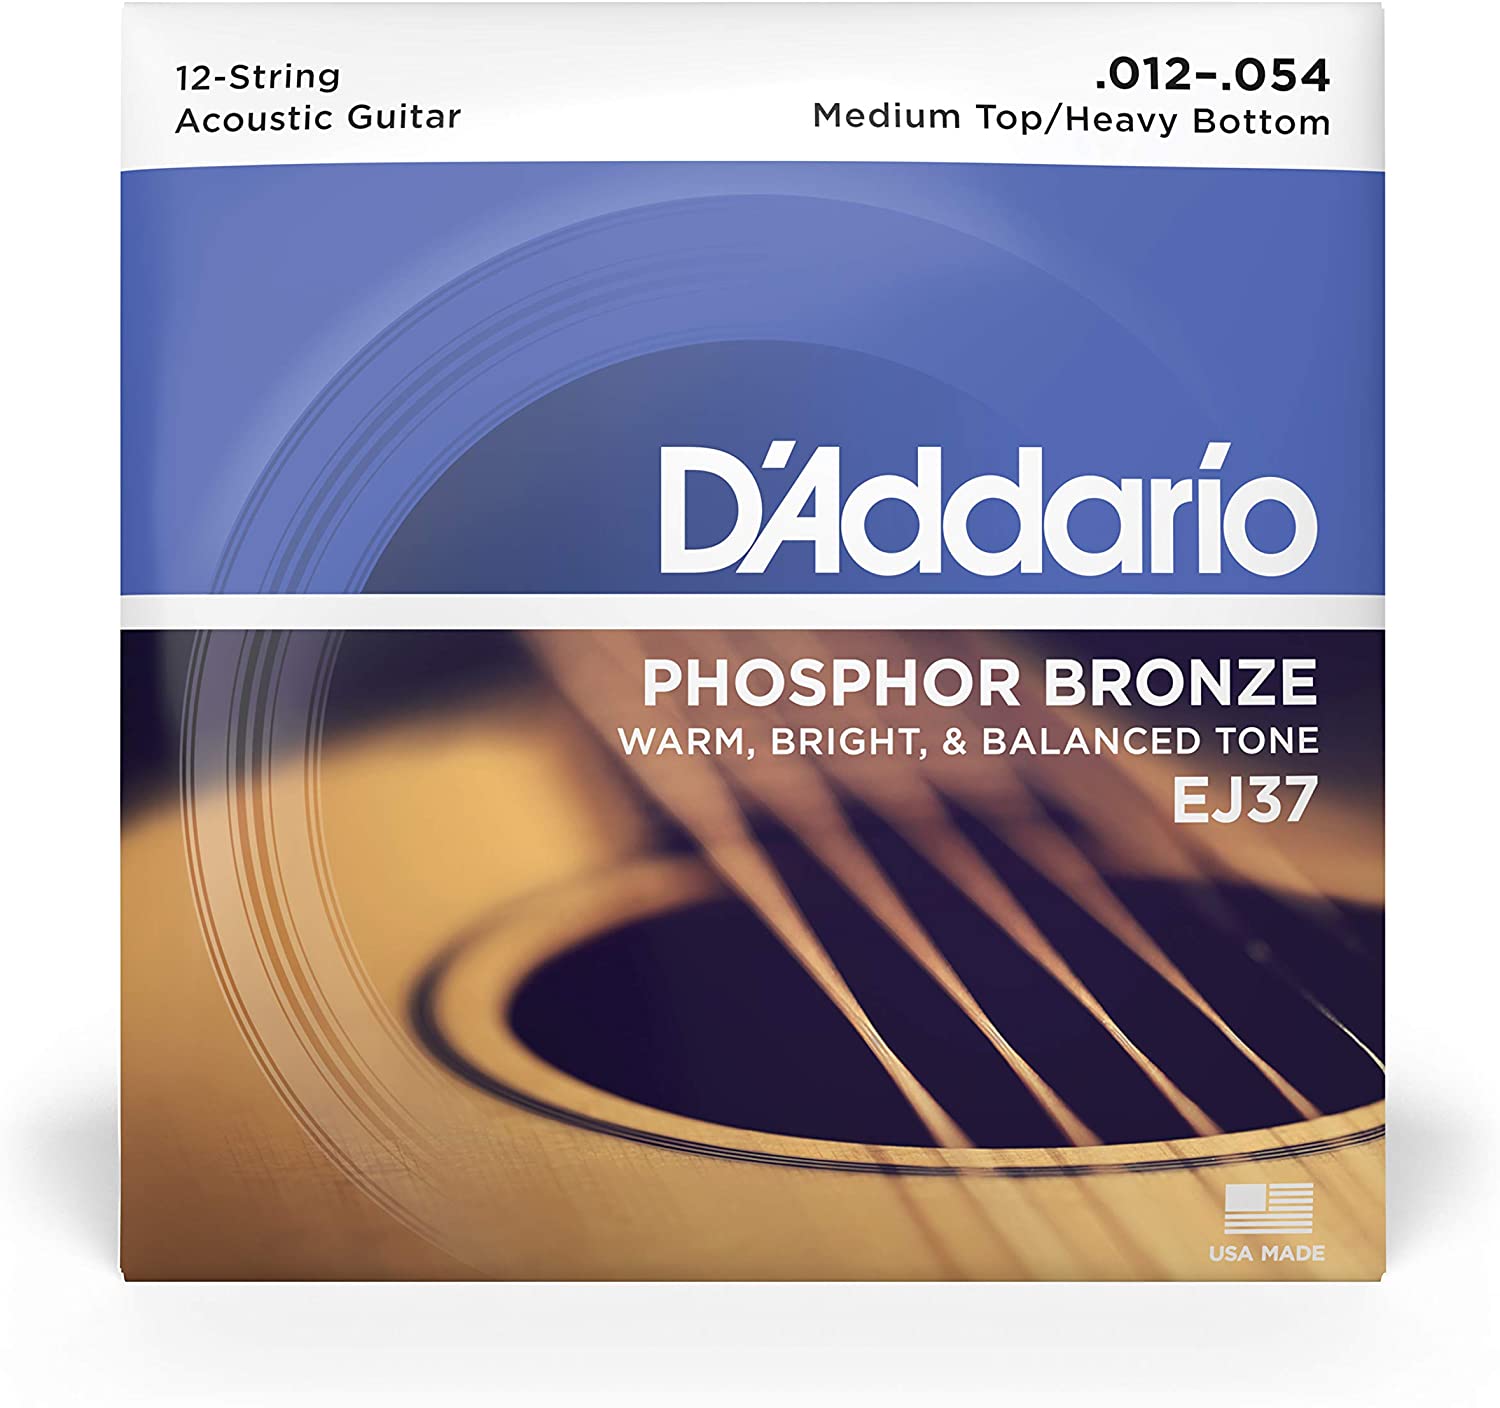 D'Addario's Acoustic Guitar Strings Medium Top Heavy Bottom